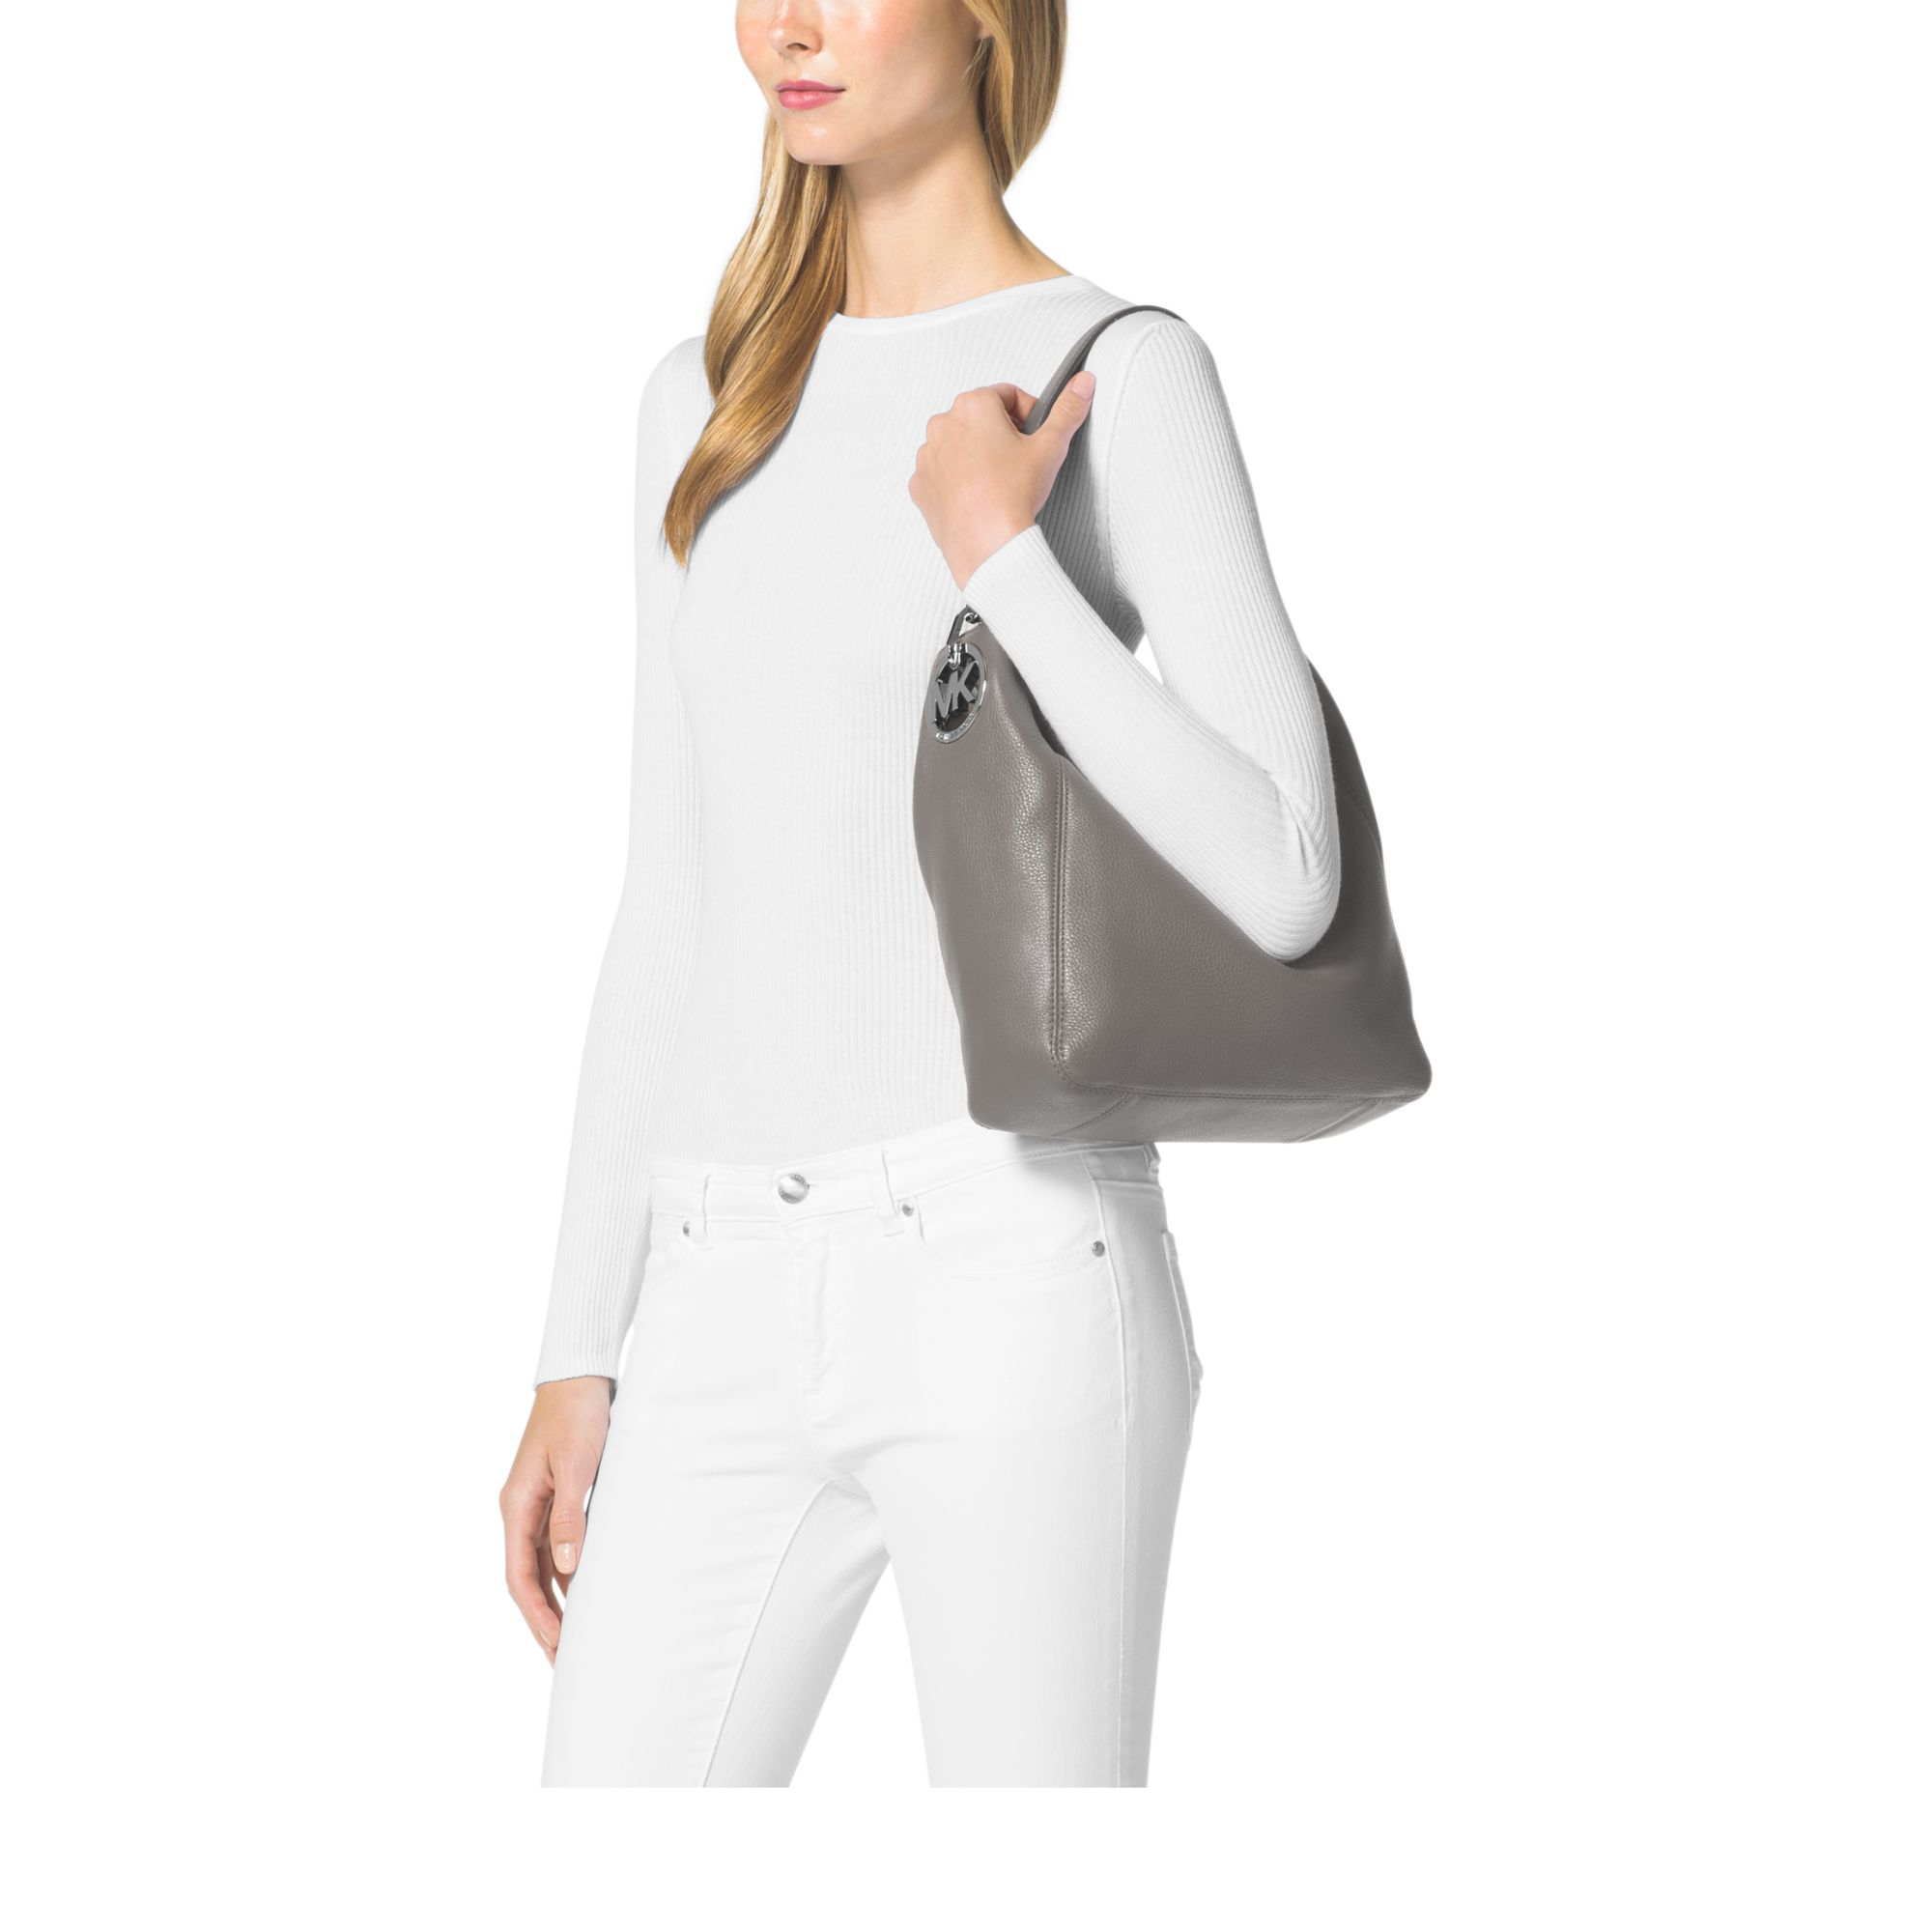 Michael Kors Fulton Medium Leather Shoulder Bag in Steel Grey (Gray) - Lyst